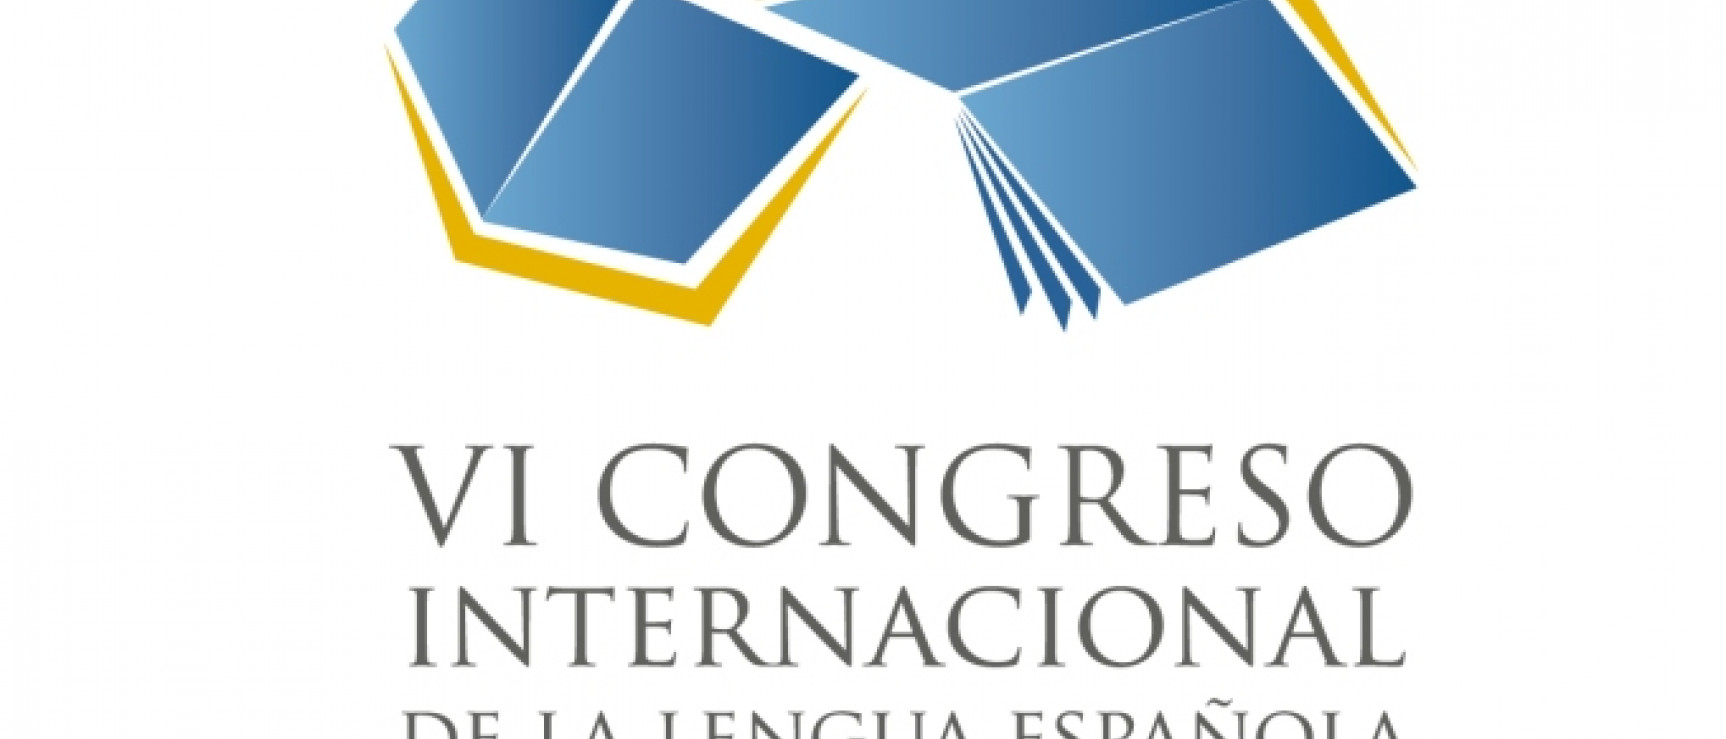 VI Congreso Internacional de la Lengua Española. Logo